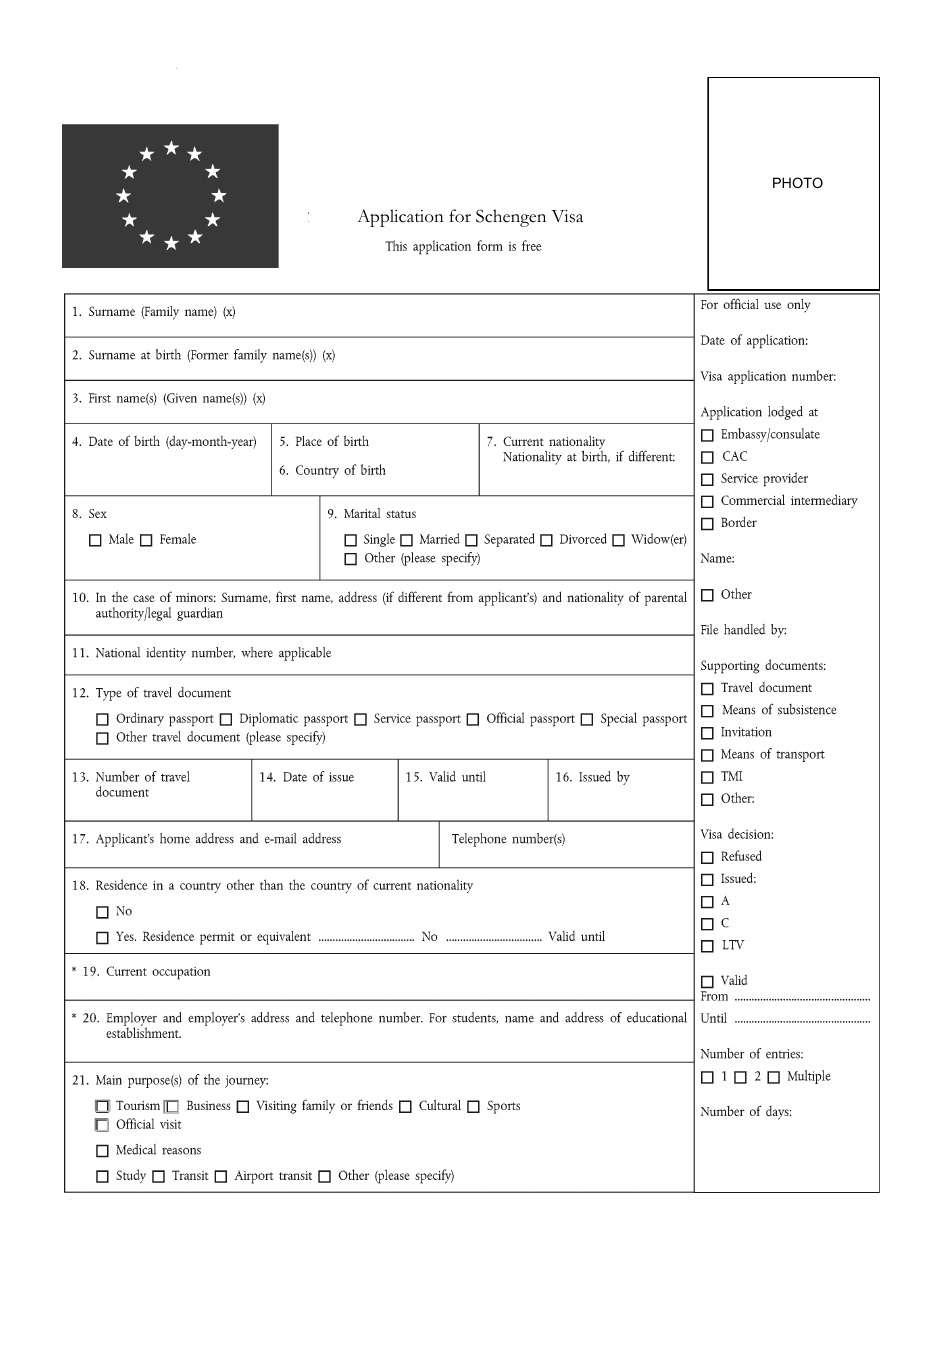 Nigeria Netherlands Schengen Visa Application Form Download Fillable